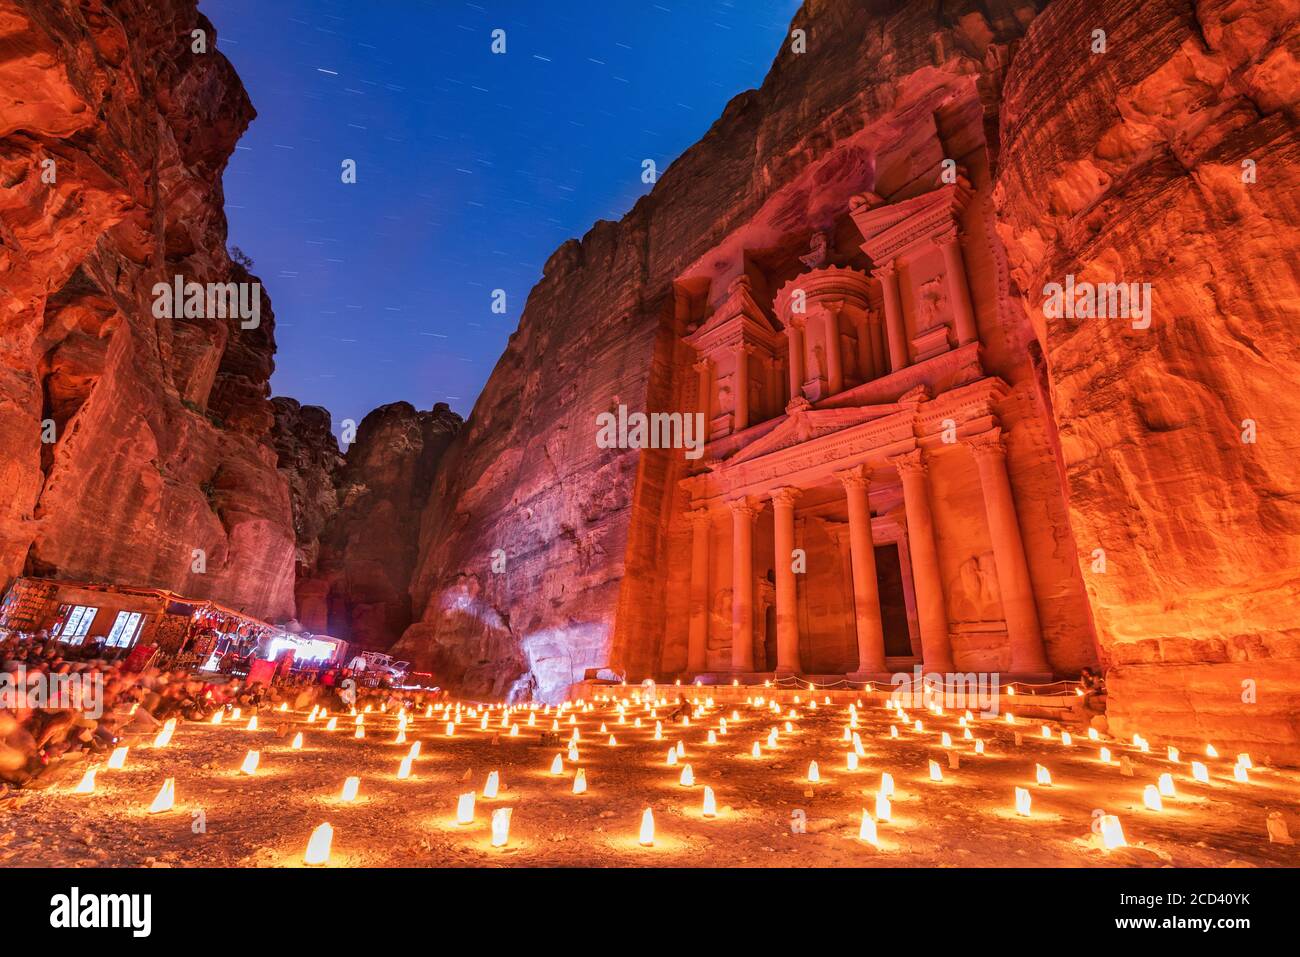 Petra, Jordanien. Al Khazneh in der antiken Stadt Petra Nacht als Schatzkammer berühmten Reiseziel im Nahen Osten bekannt. Stockfoto